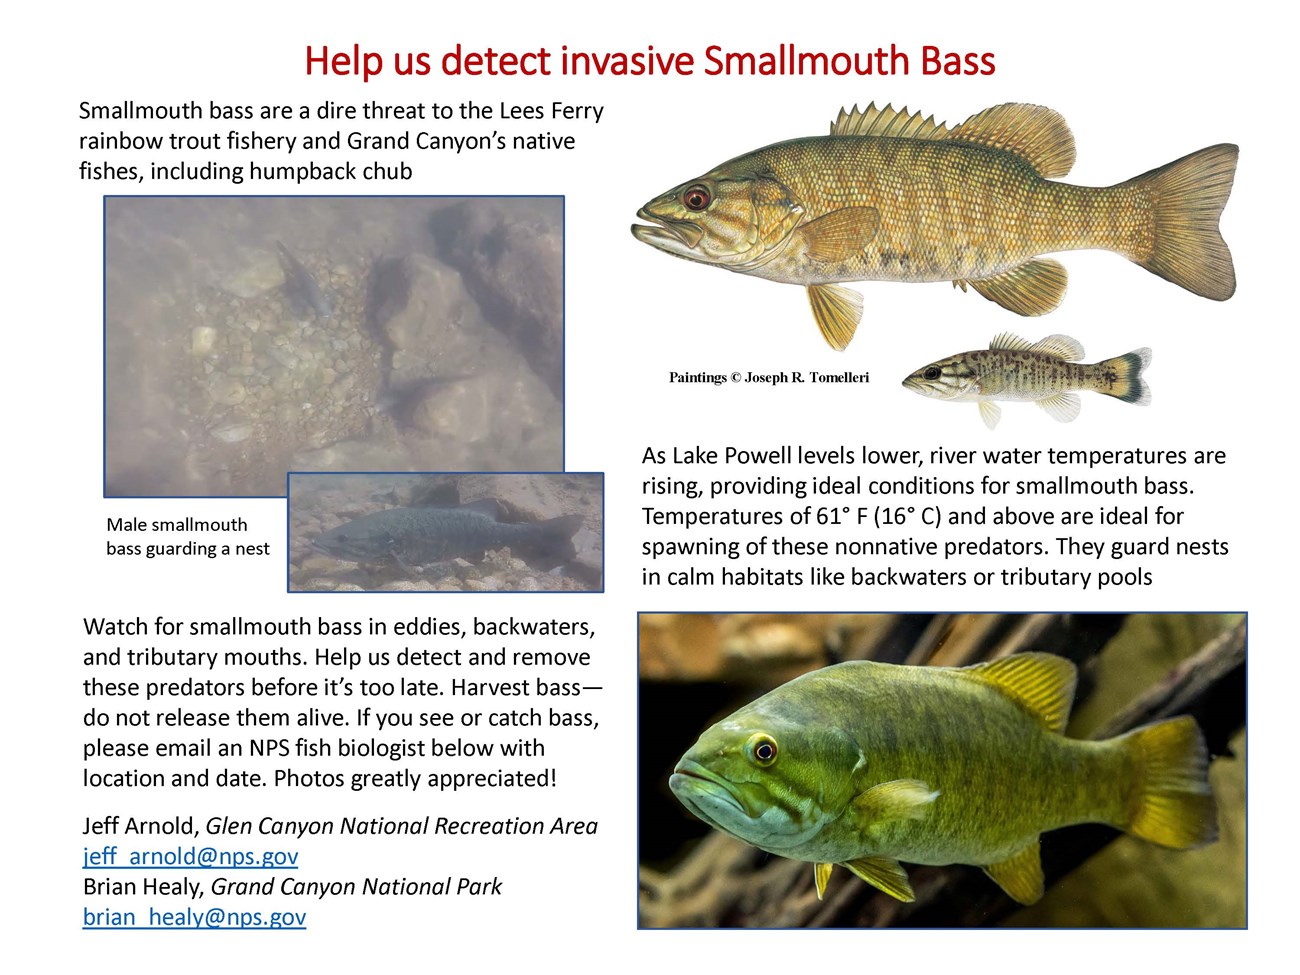 Description of smallmouth bass for Colorado River anglers